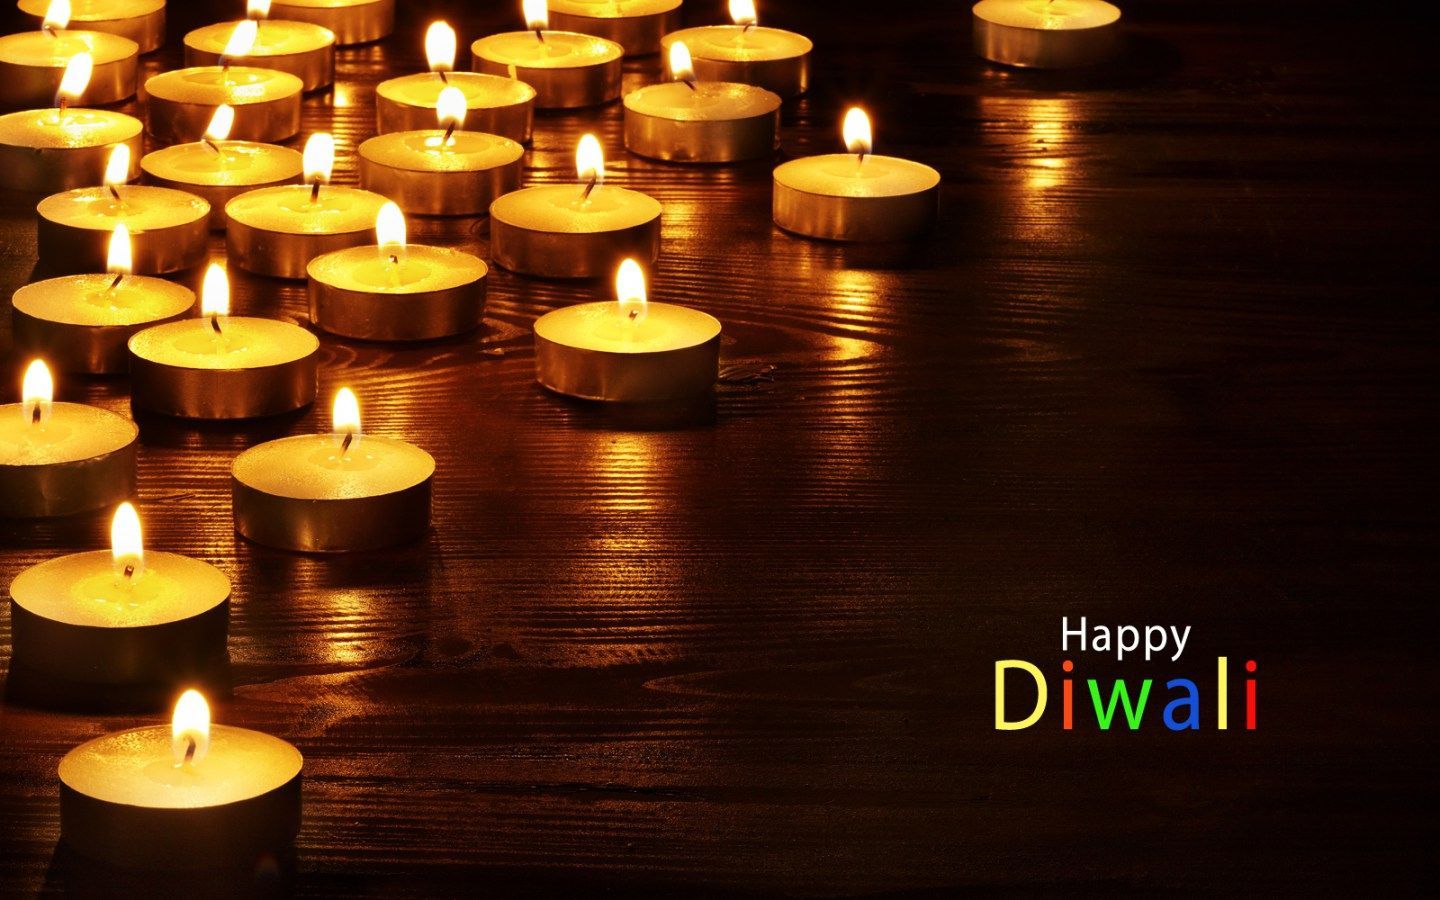 Diwali Wallpaper Greetings HD Wallpaper Background Image. Diwali wallpaper, Burning candle, Candle lighting ceremony